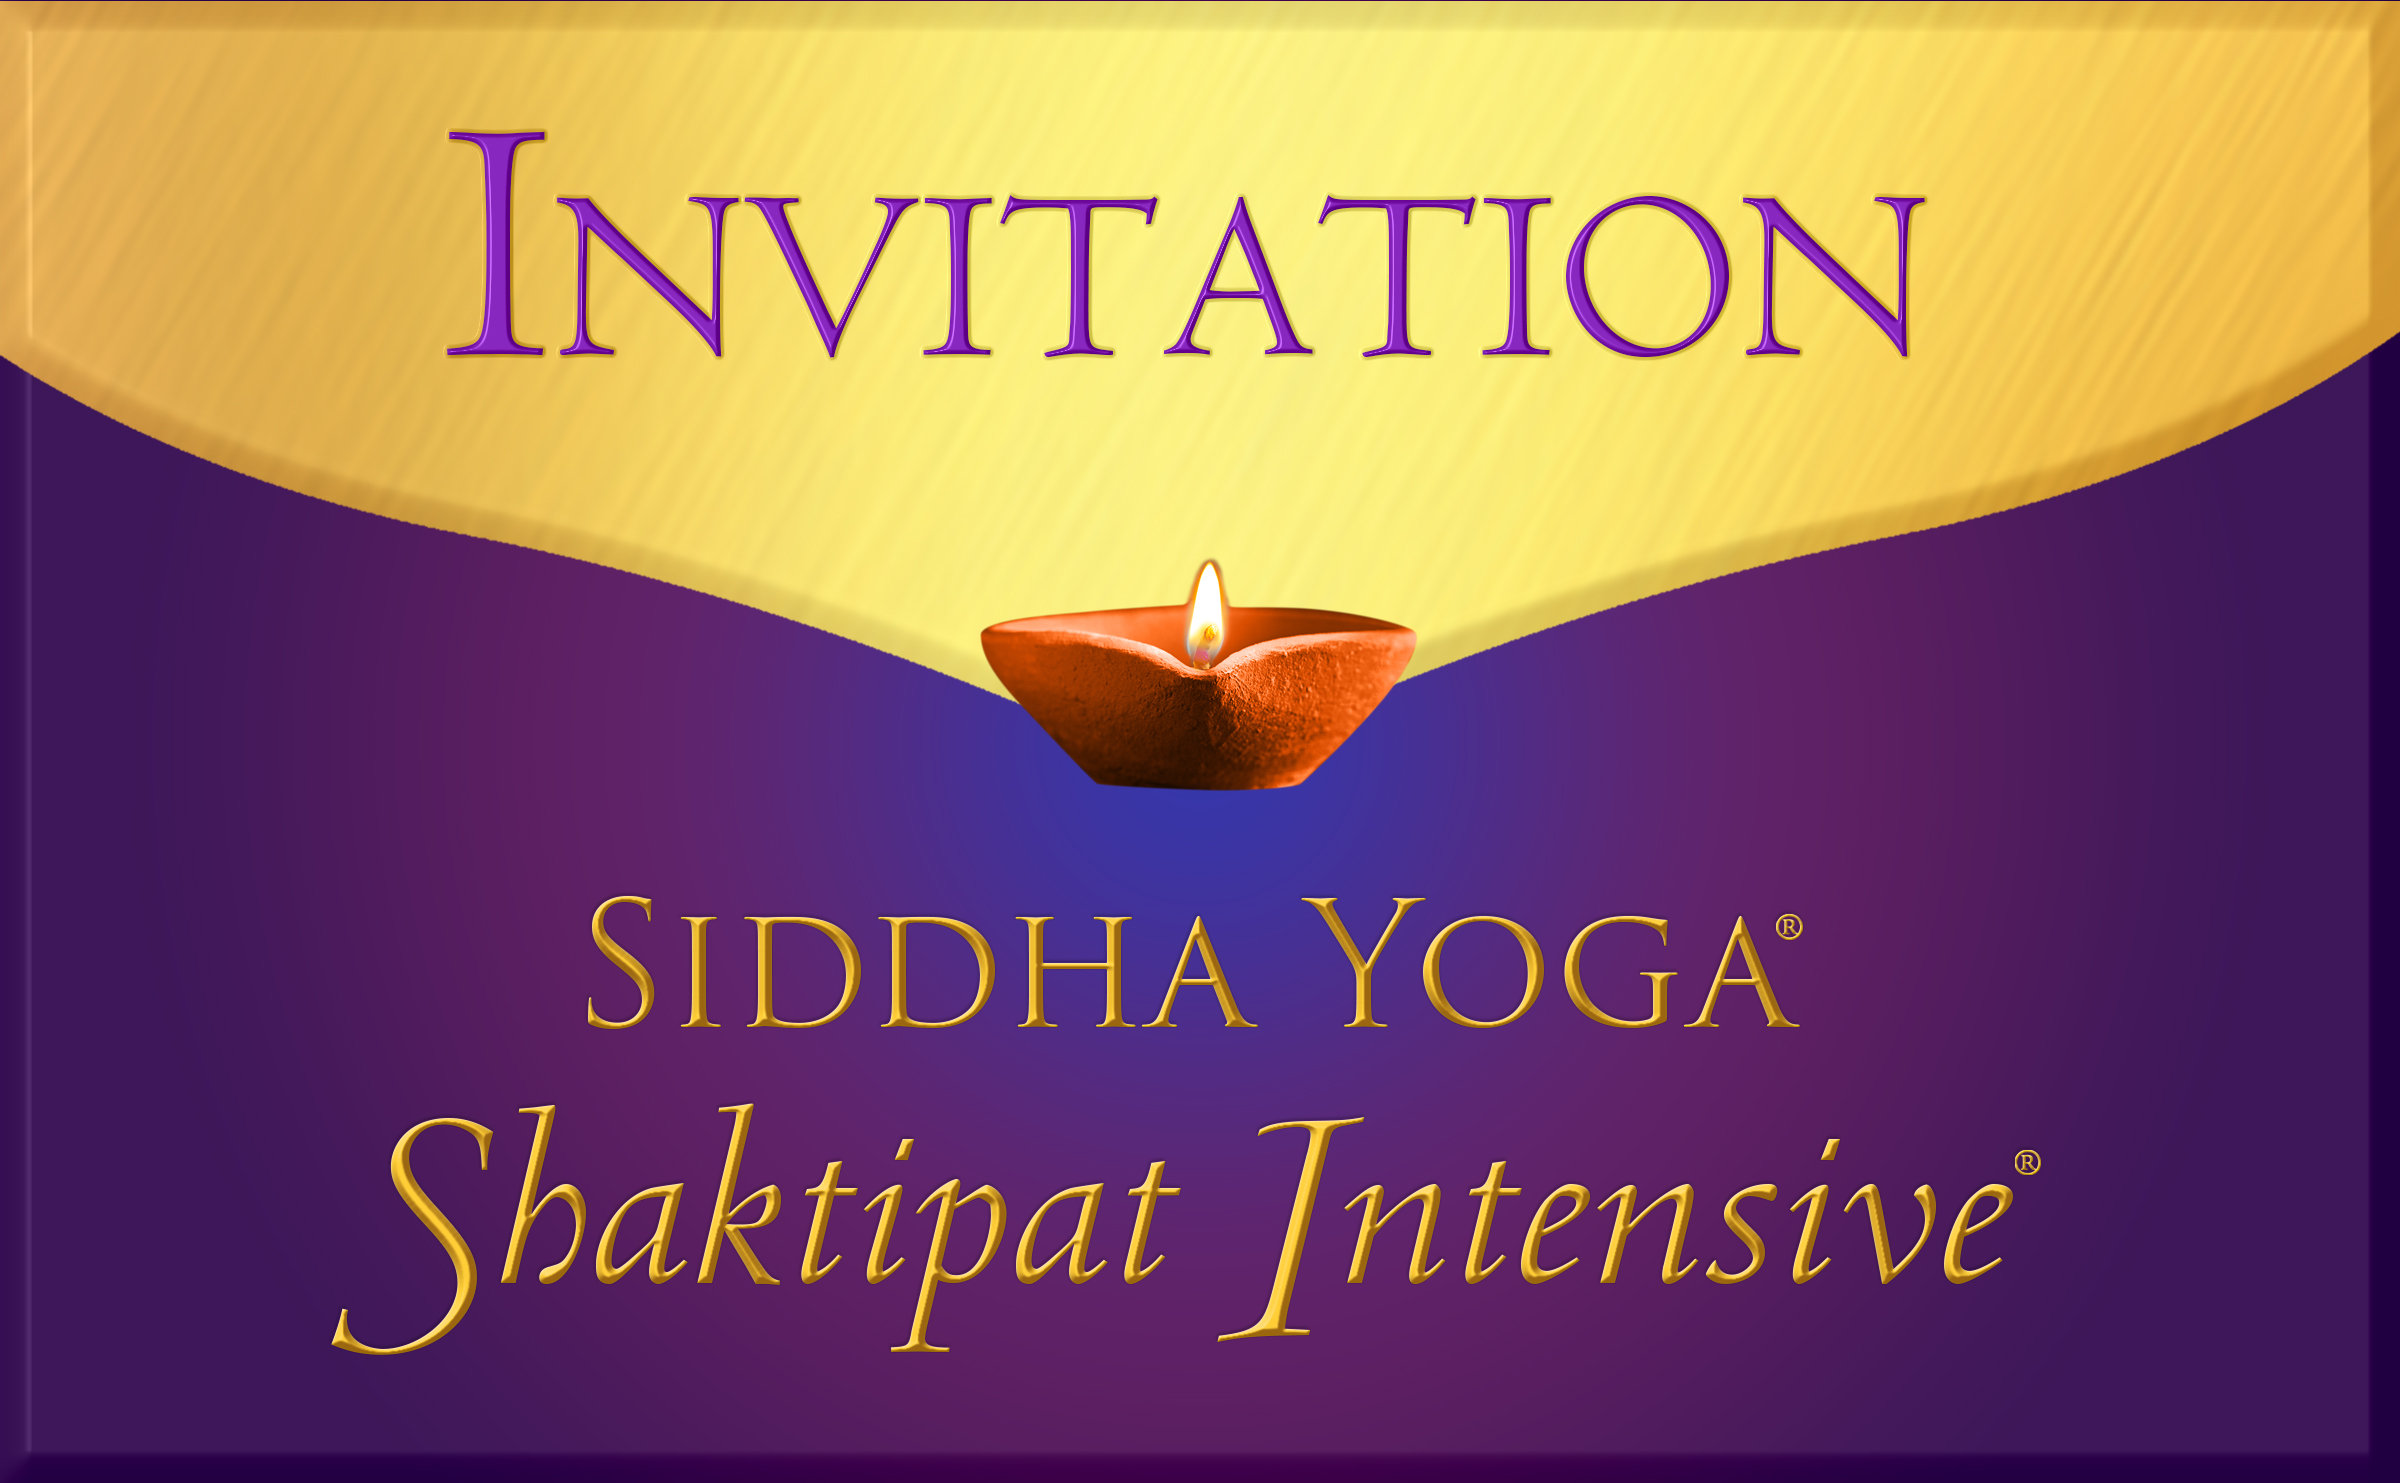 Shaktipat Intensive - Invitation